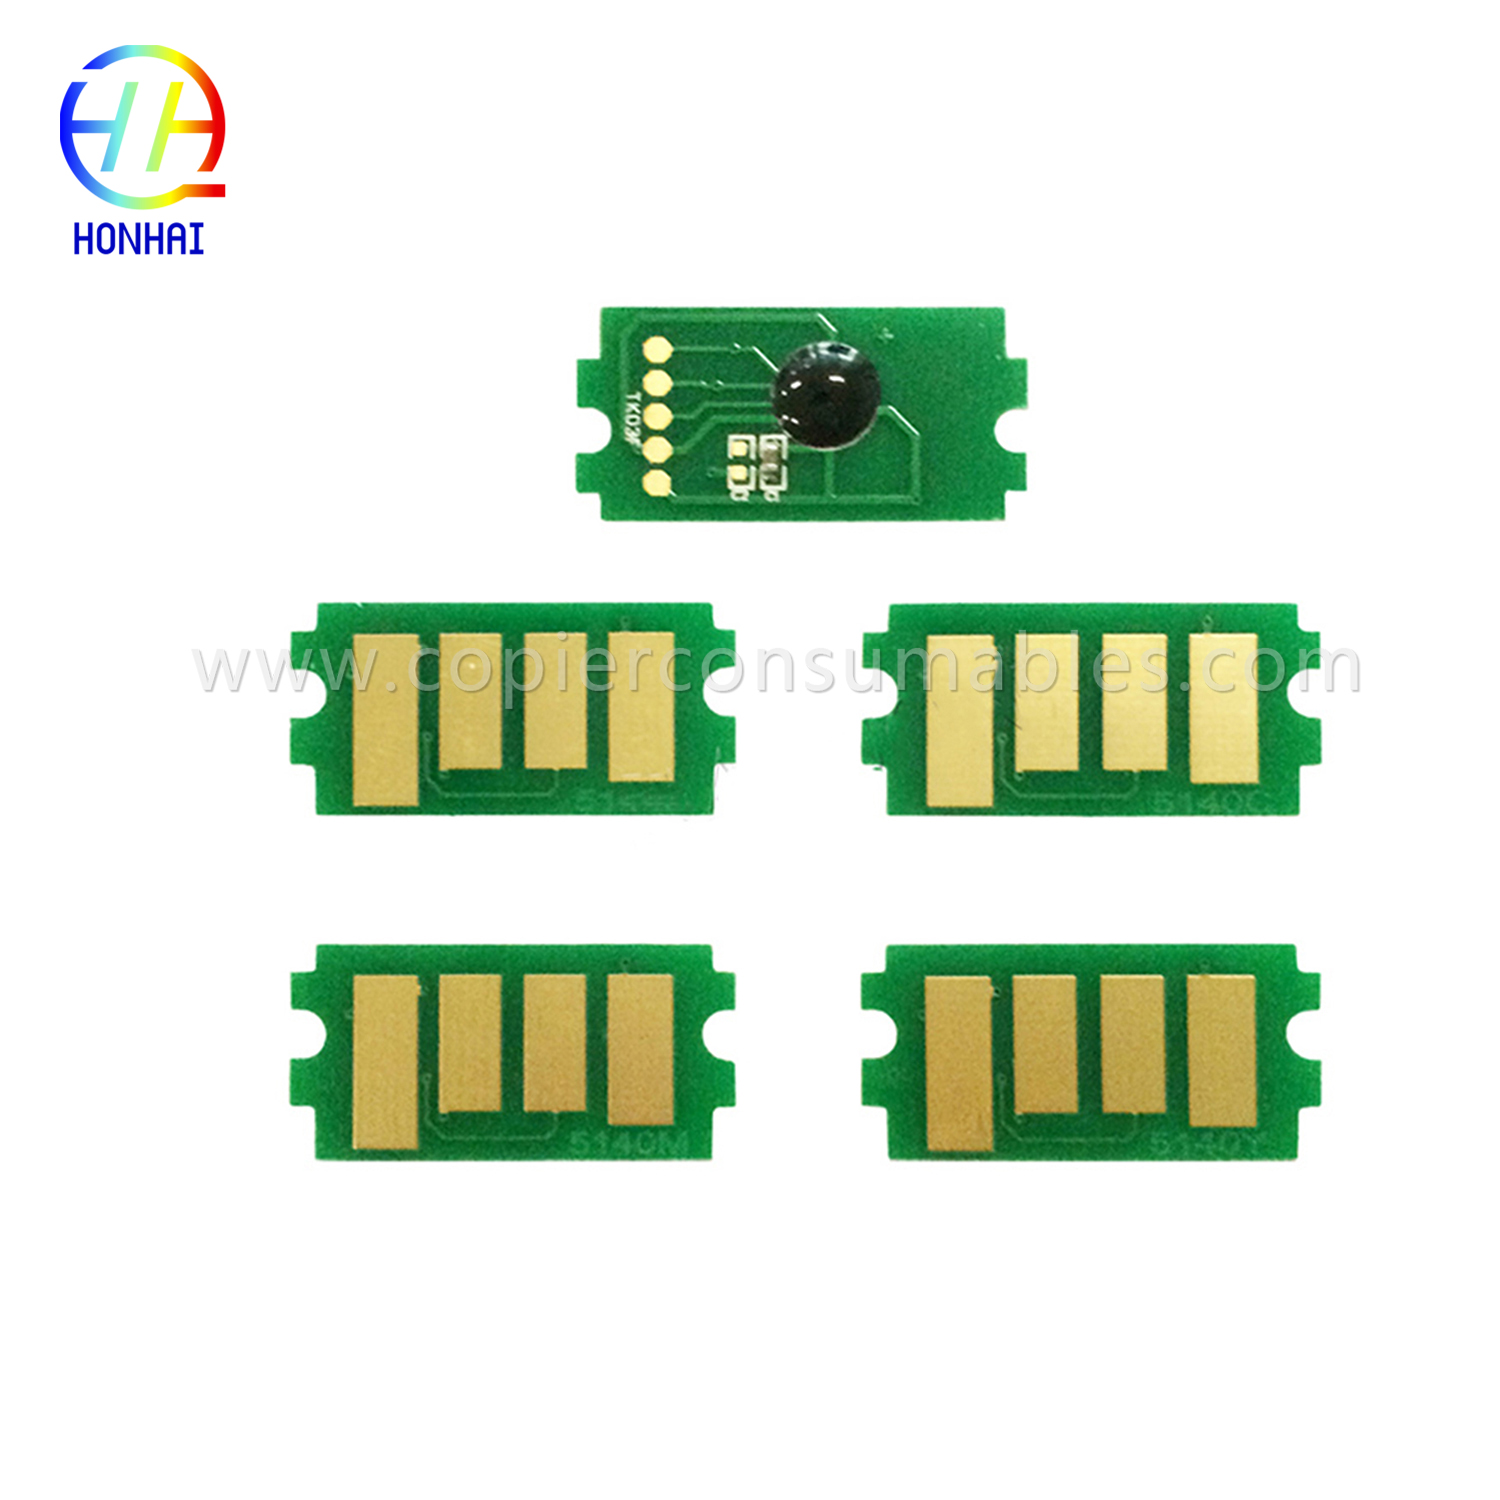 Toner Cartridge Chip for Kyocera Ecosys M6030cdn M6530cdn P6130cdn P6530cdn (TK-5140)